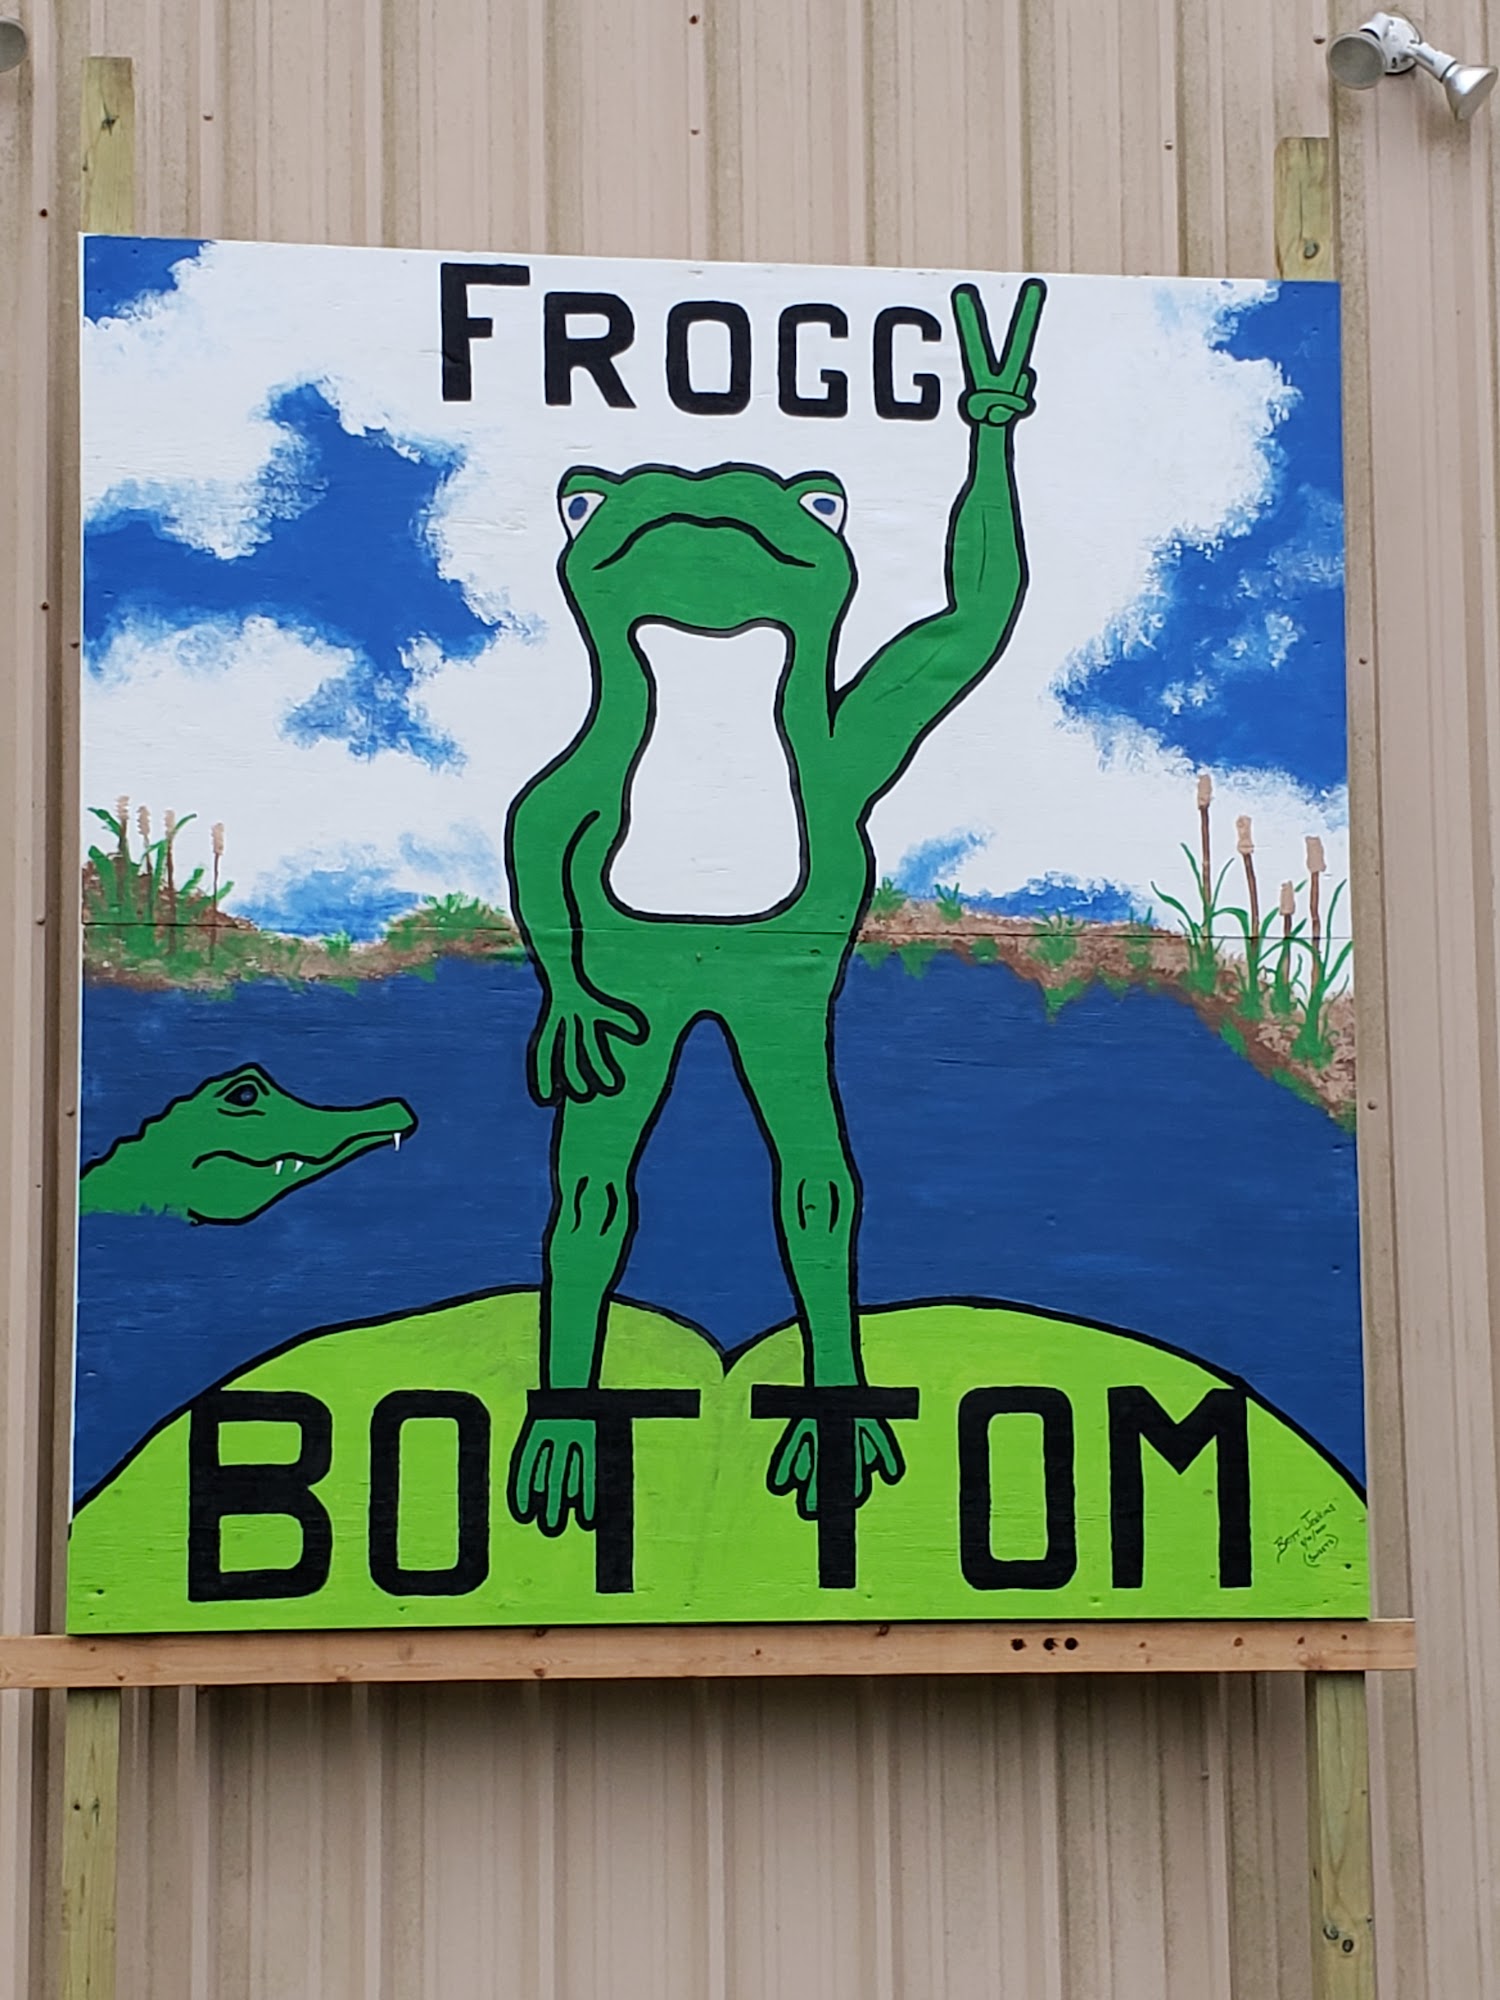 Froggy Bottom Bar